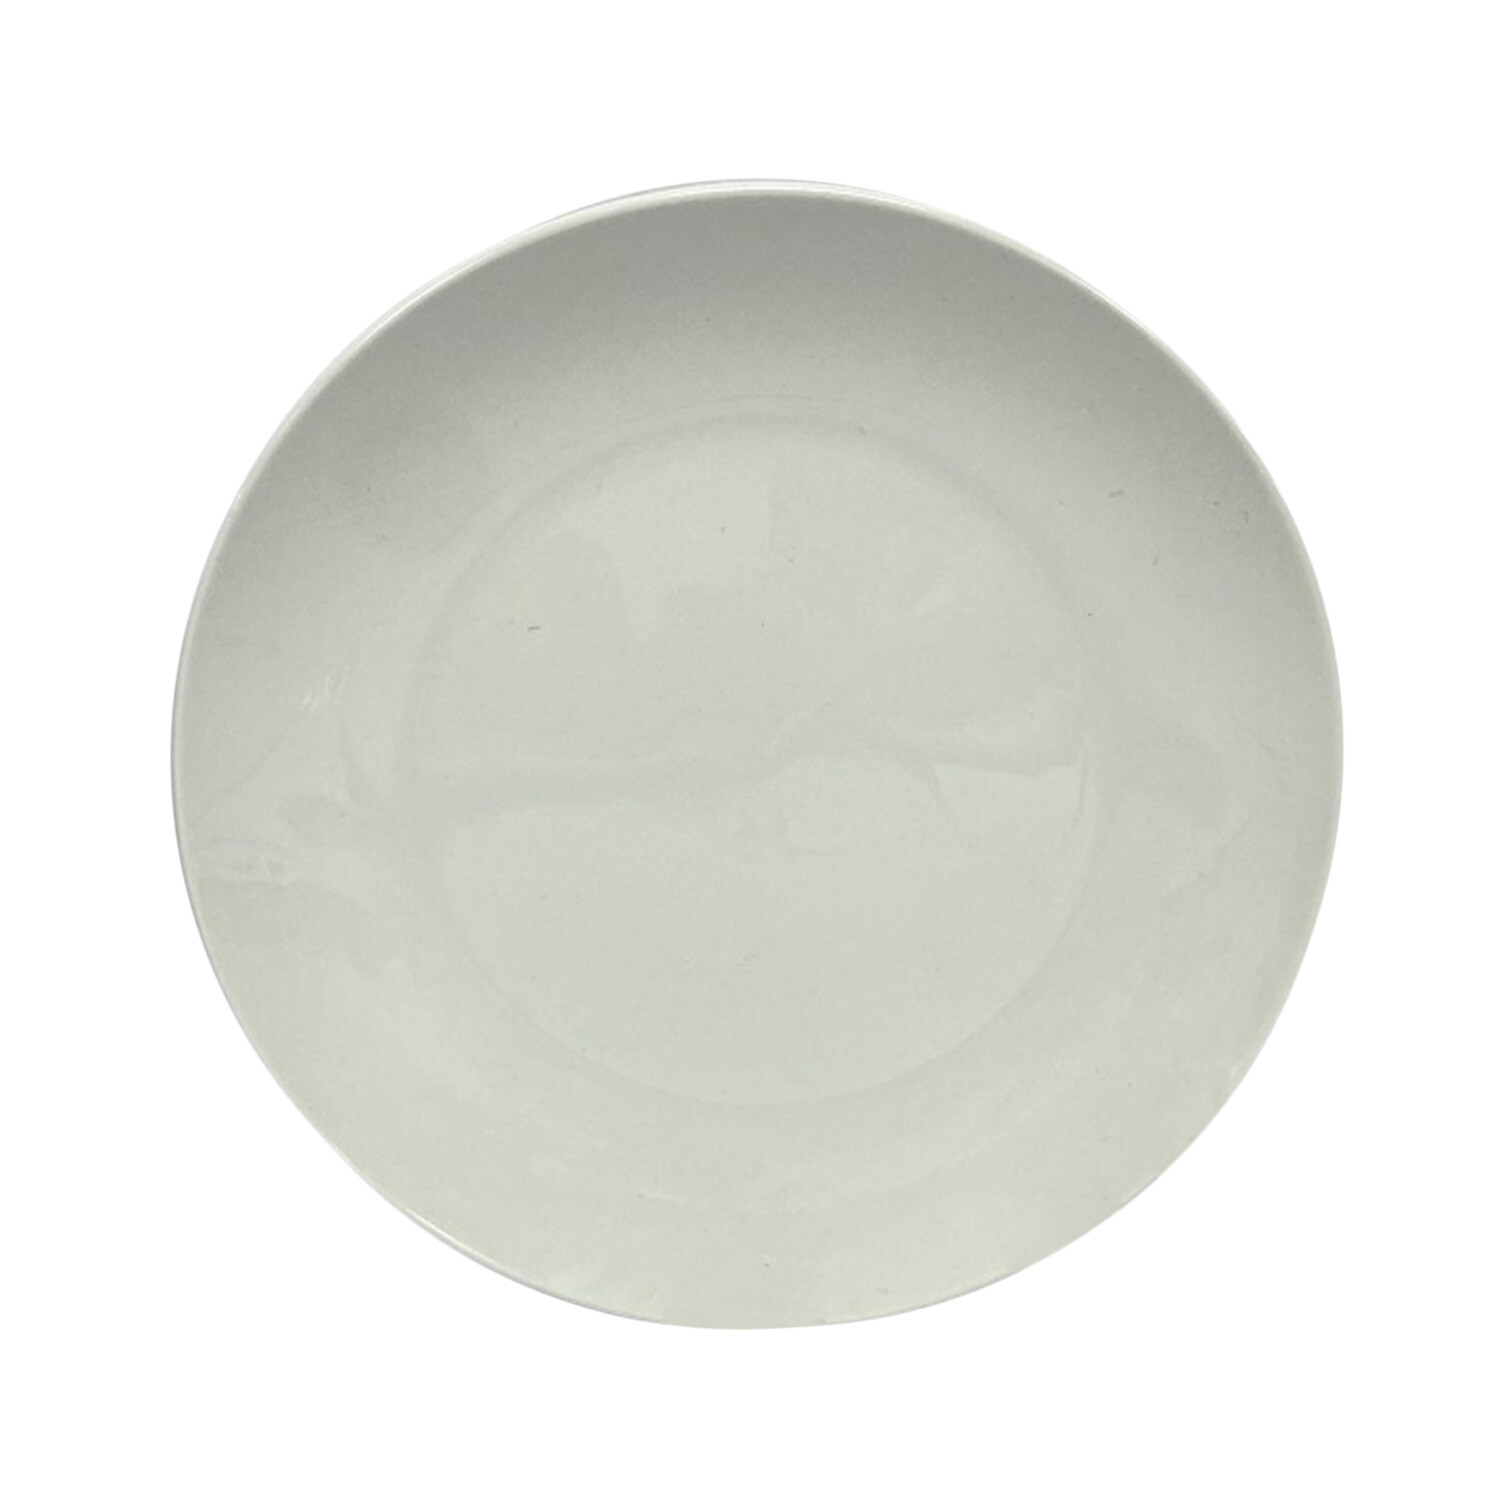 Essentials White Porcelain Side Plate Image